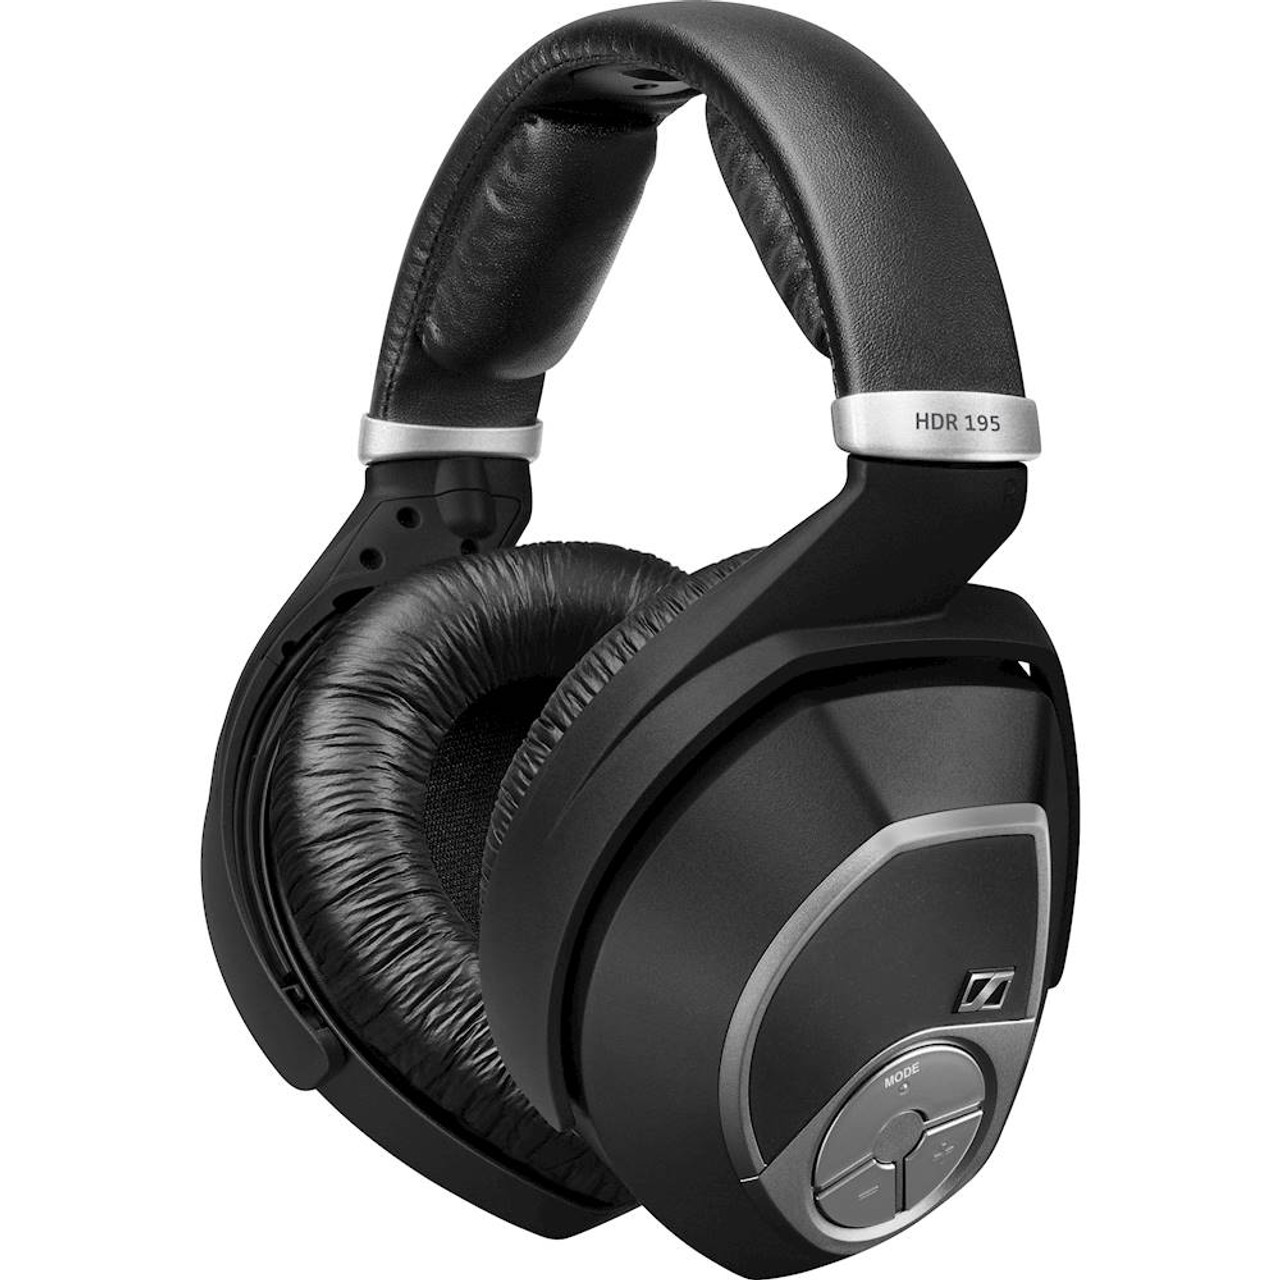 Sennheiser - RS 195 RF Wireless Over-the-Ear Headphones - Black